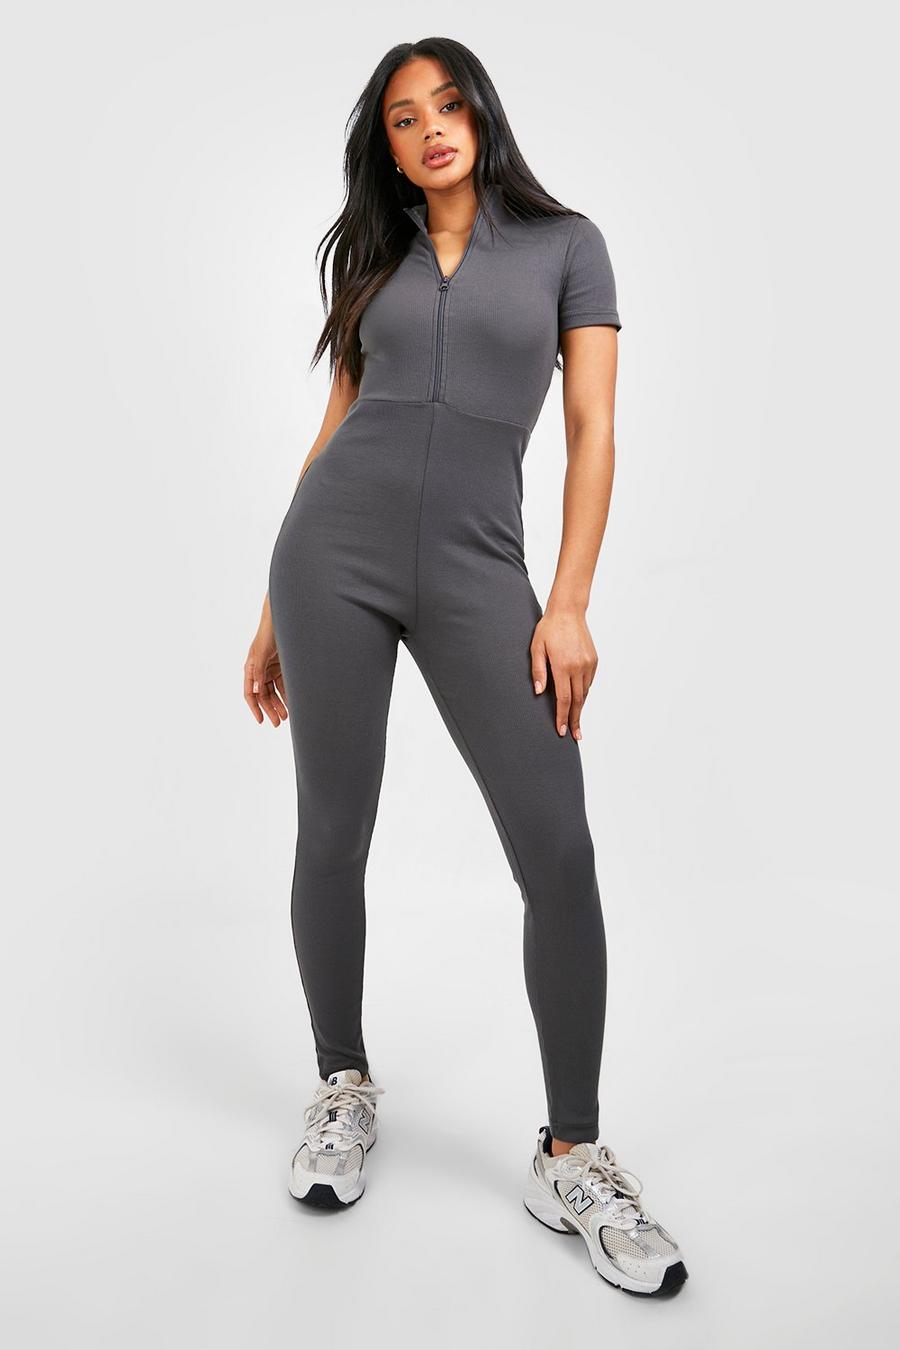 Charcoal grey Rib Zip Front Short Sleeve Unitard Jumpsuit 